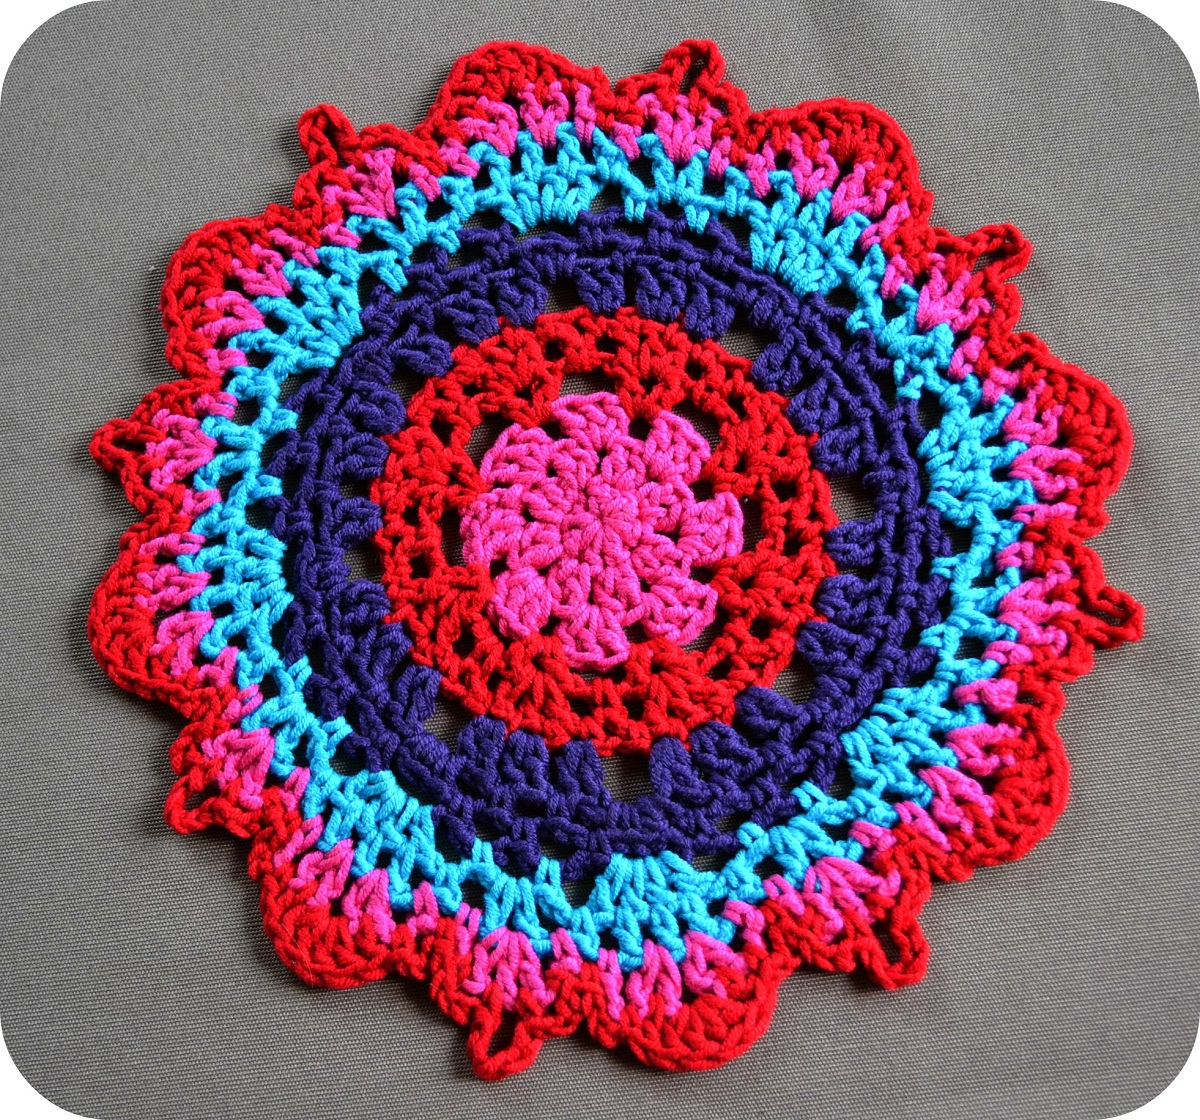 Crochet Centerpiece Pattern 15 Crochet Doily Patterns Guide Patterns